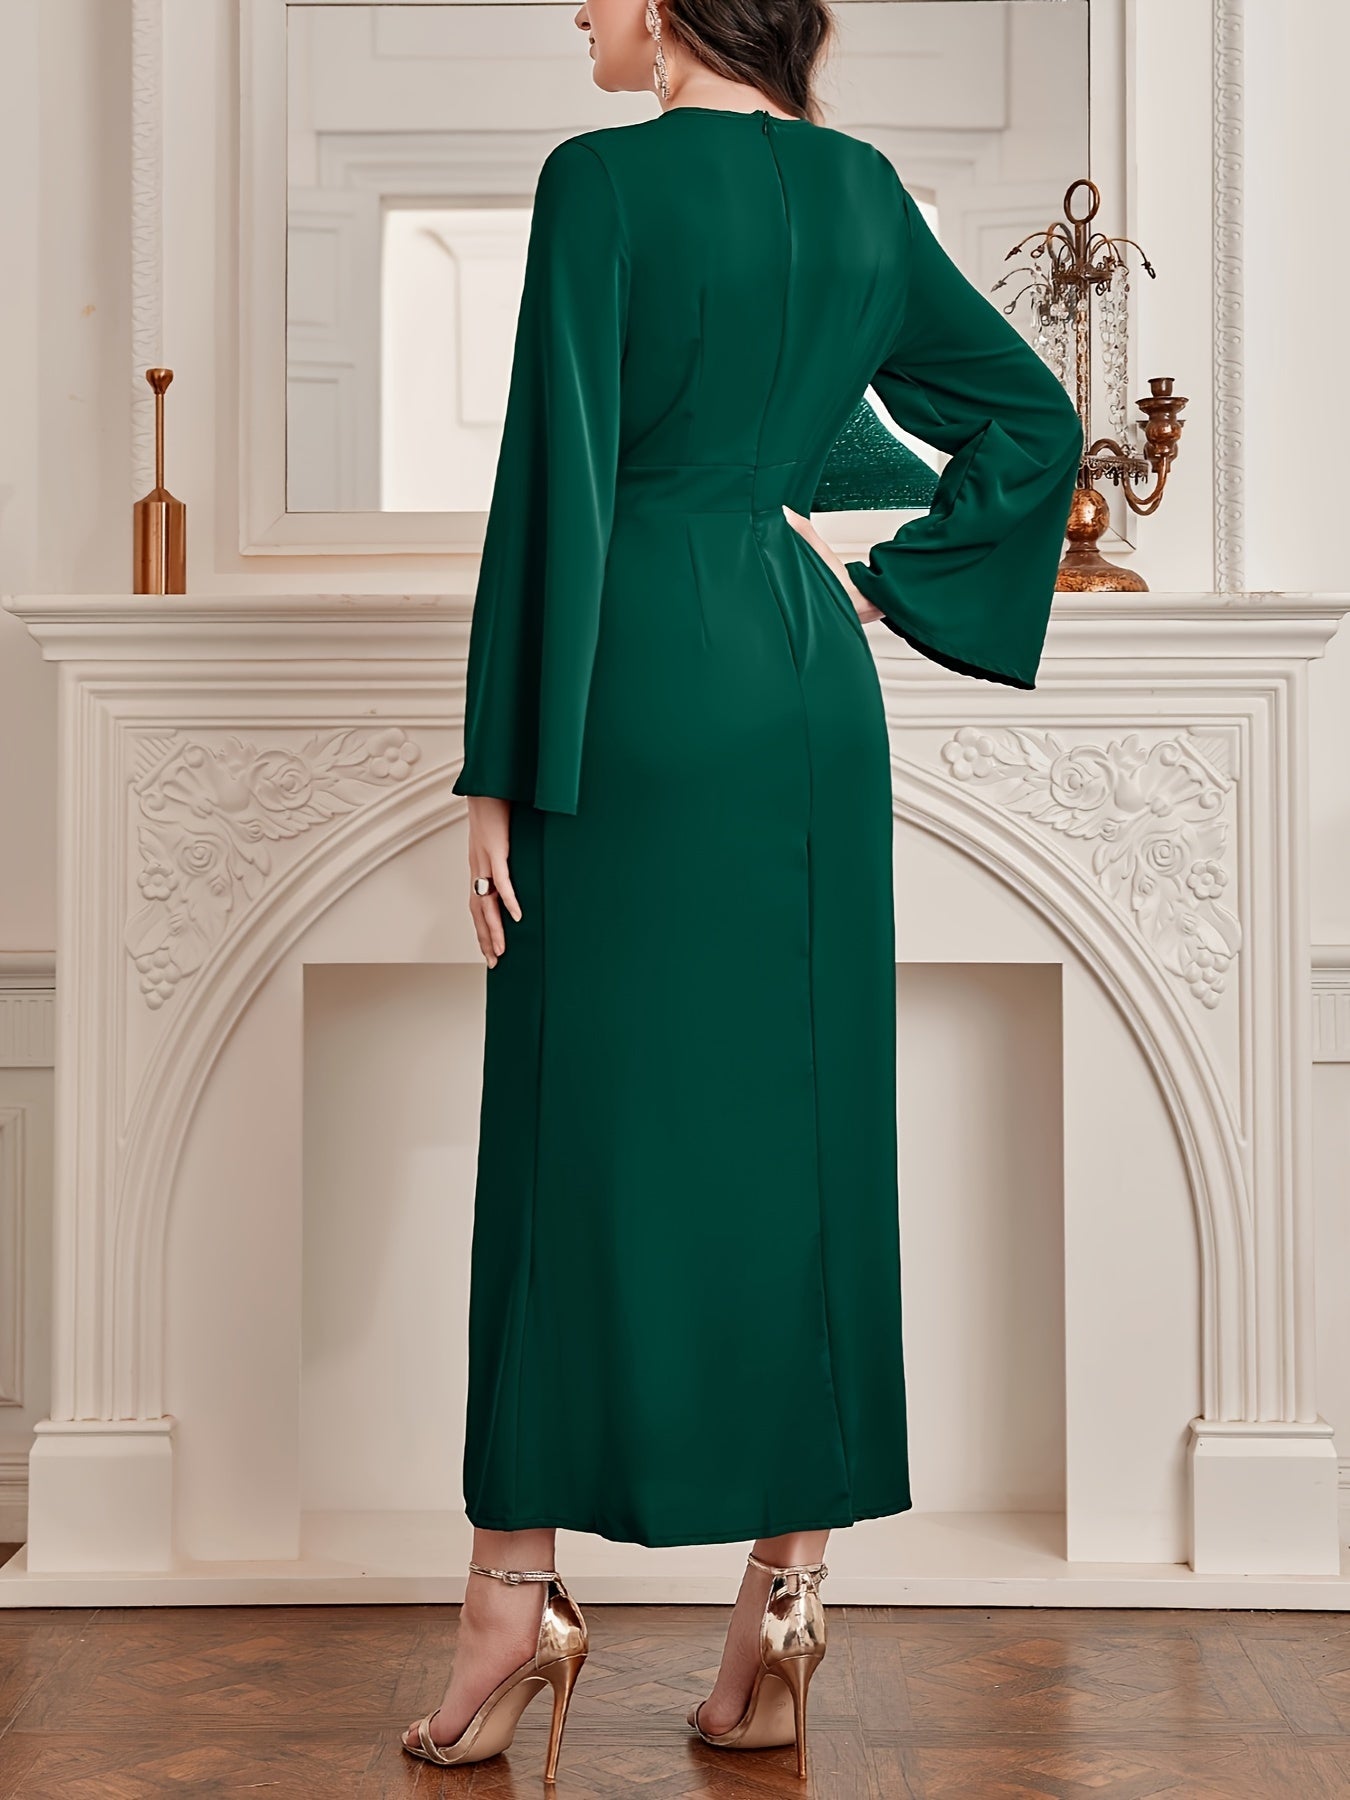 Antmvs Tucked Solid Maxi Dress, Elegant Long Sleeve Bodycon V Neck Dress, Women's Clothing